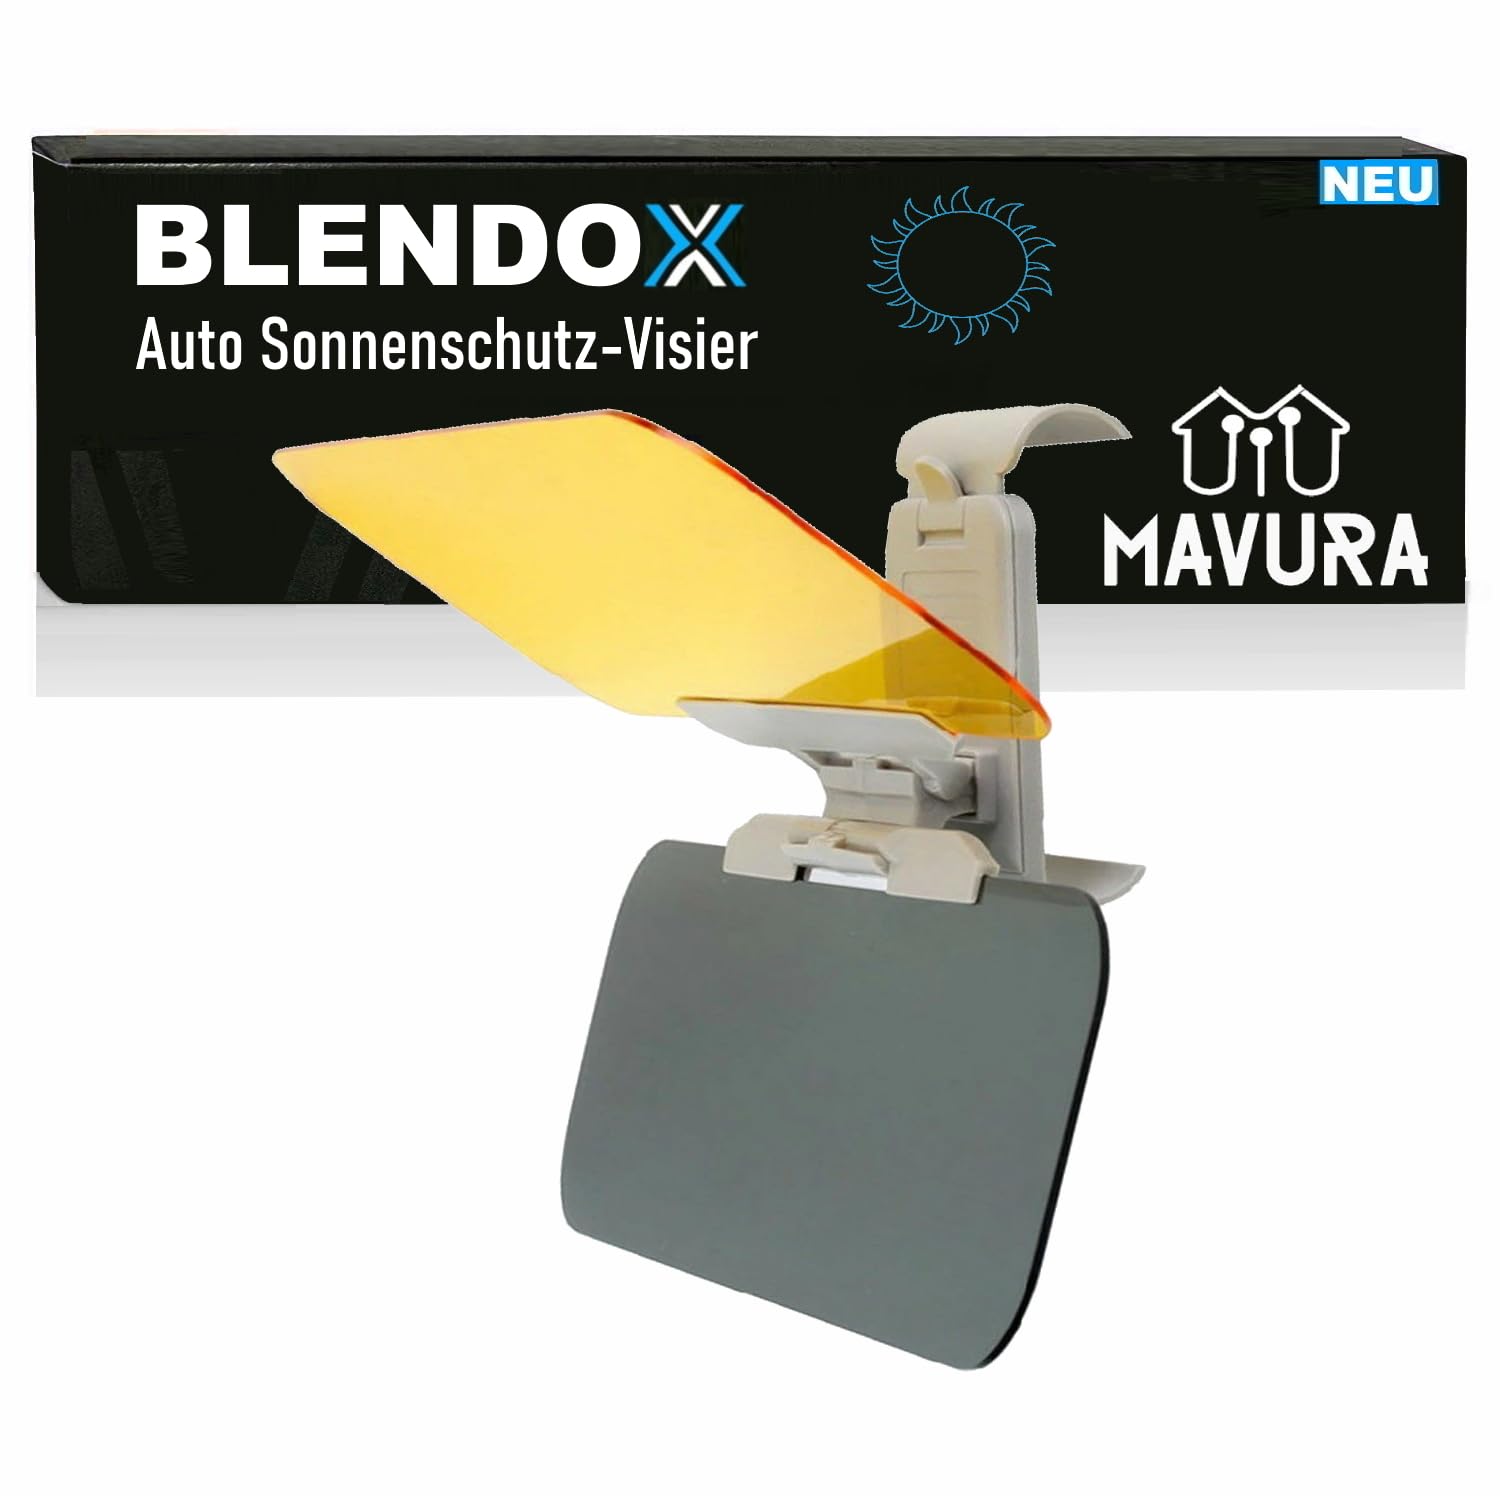 BLENDOX Sonnen Blendschutz Visier Auto Sonnenblenden, MAVURA, Visierverlängerung Sonnenblende Verlängerung Sonnenschutz von MAVURA